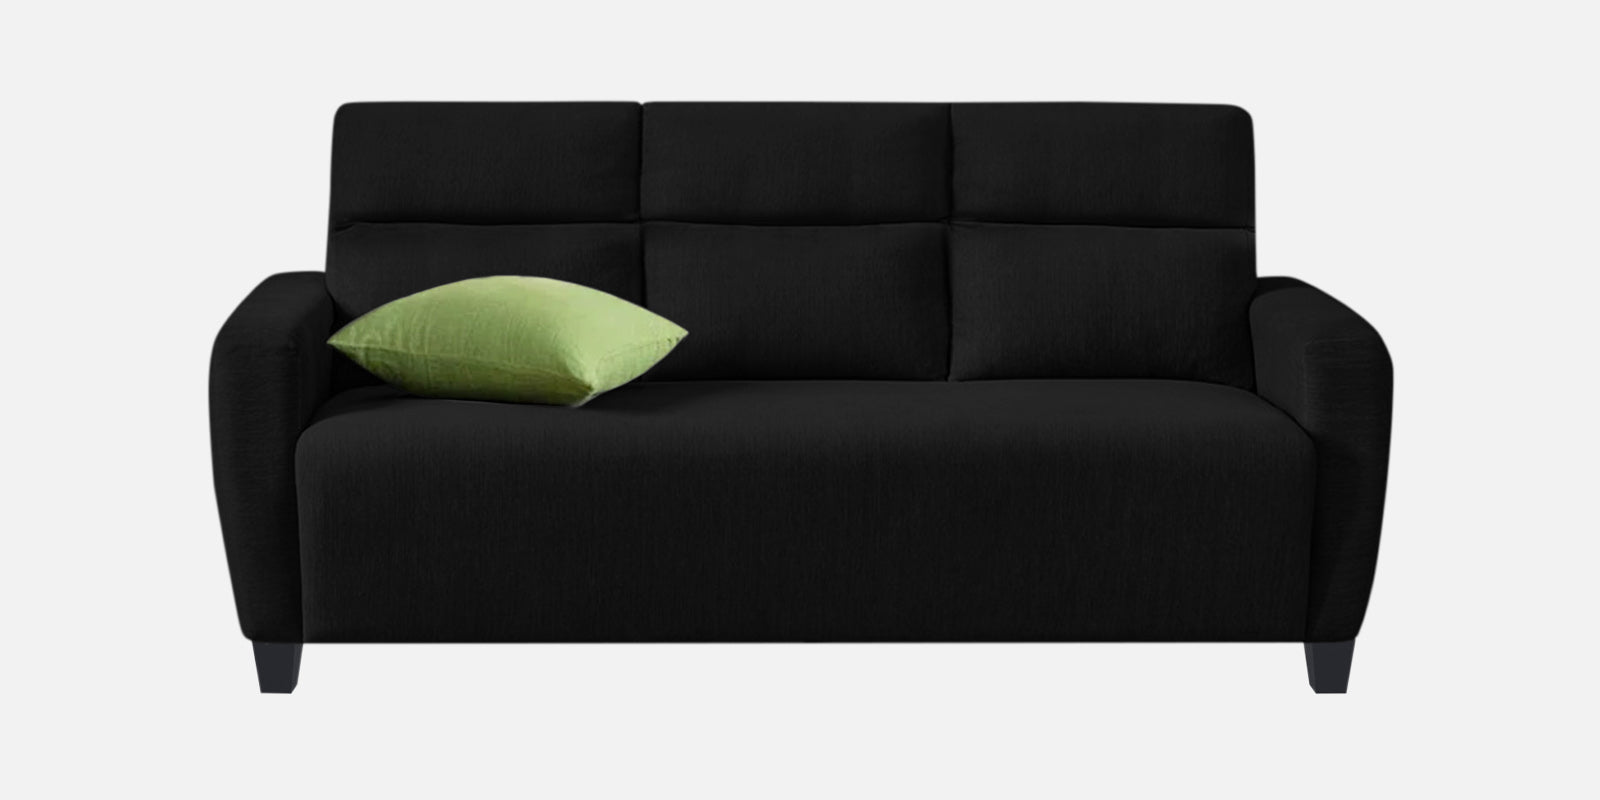 Bakadi Fabric 3 Seater Sofa in Zed Black Colour